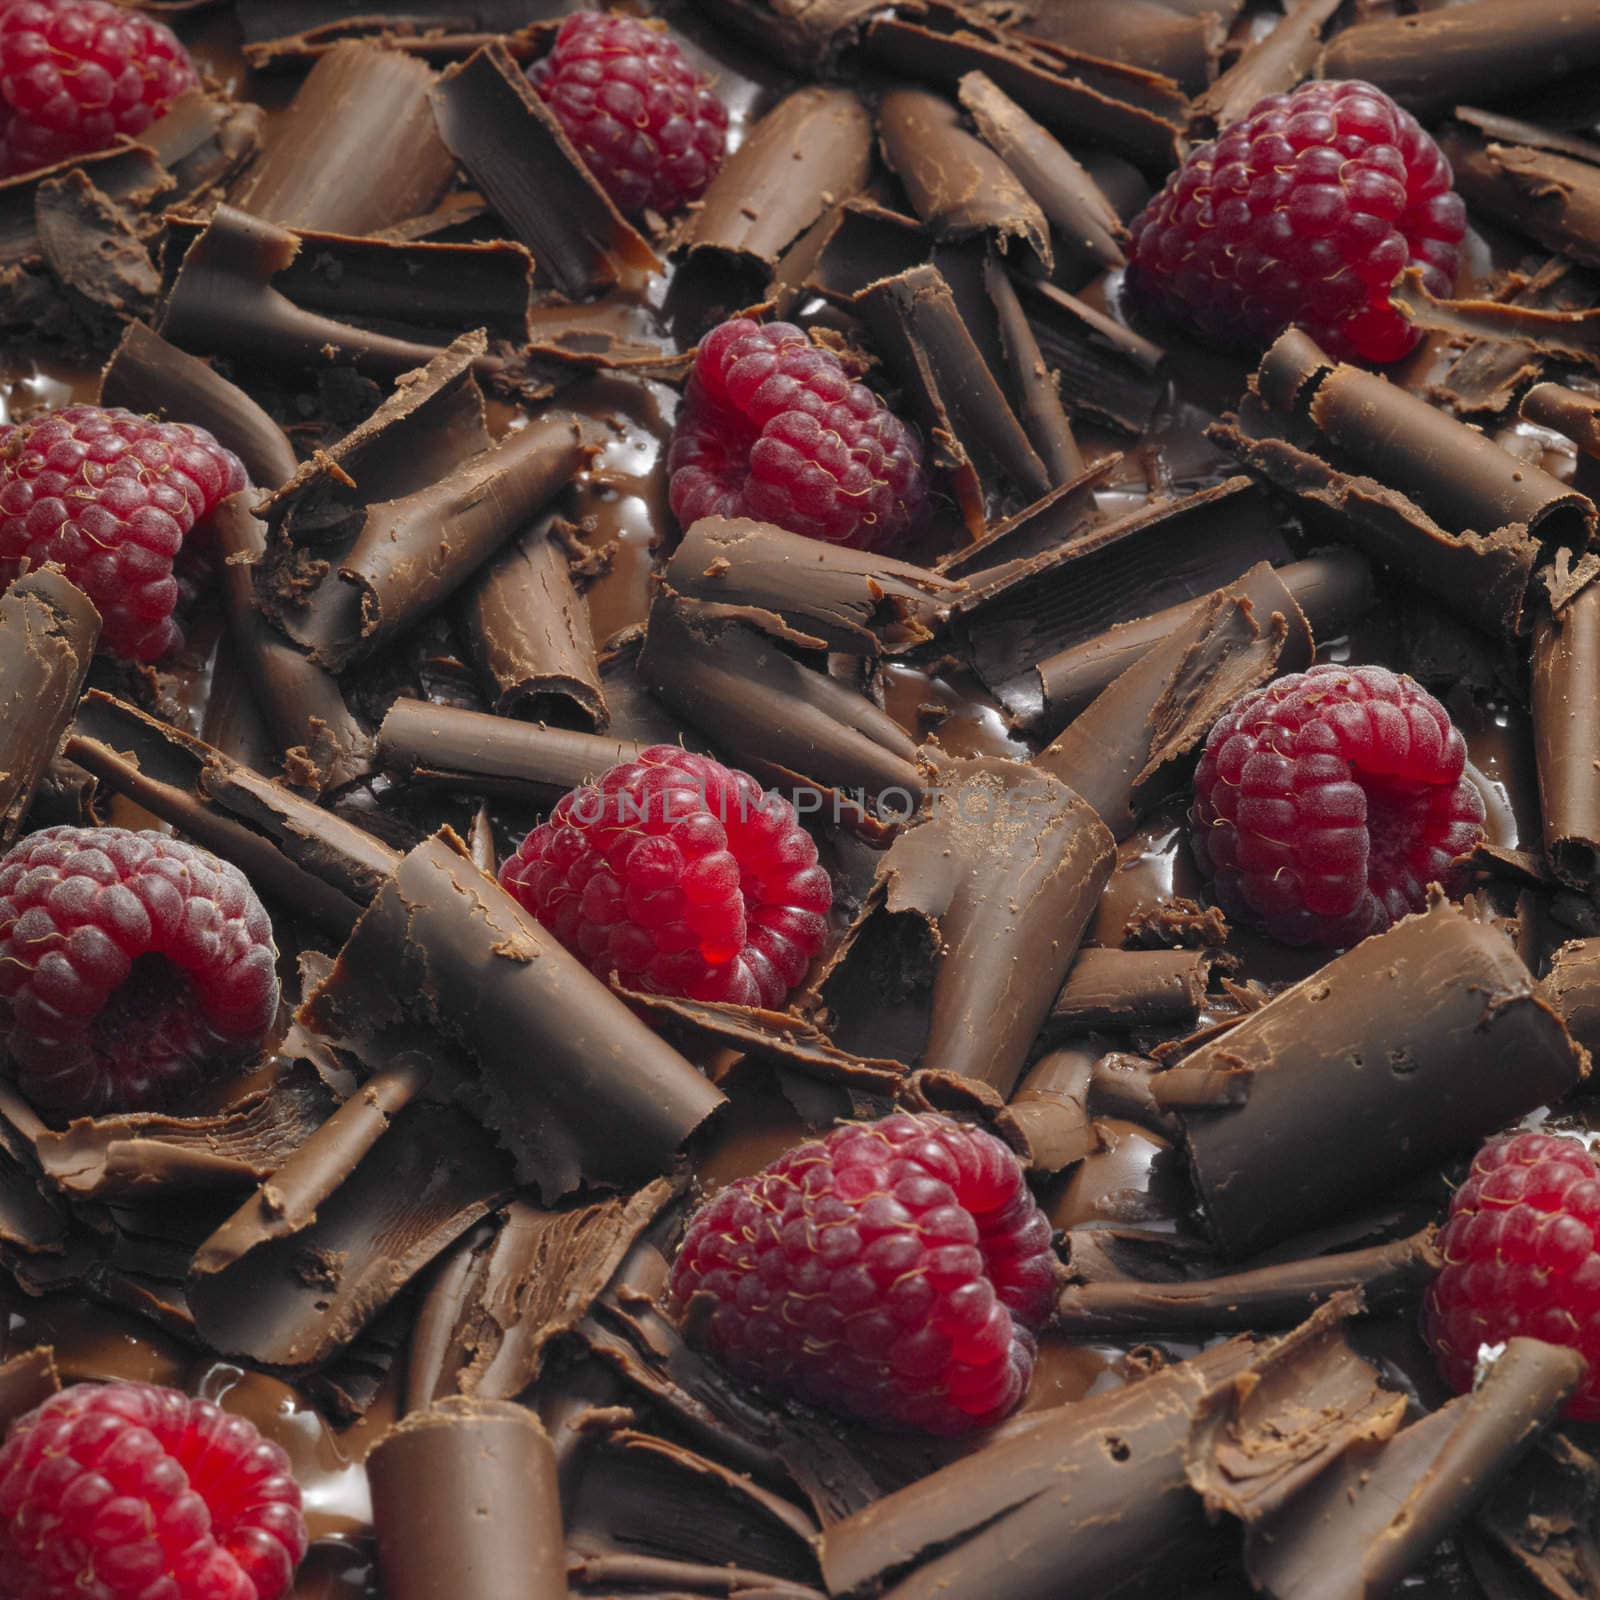 raspberries with chocolate by phbcz